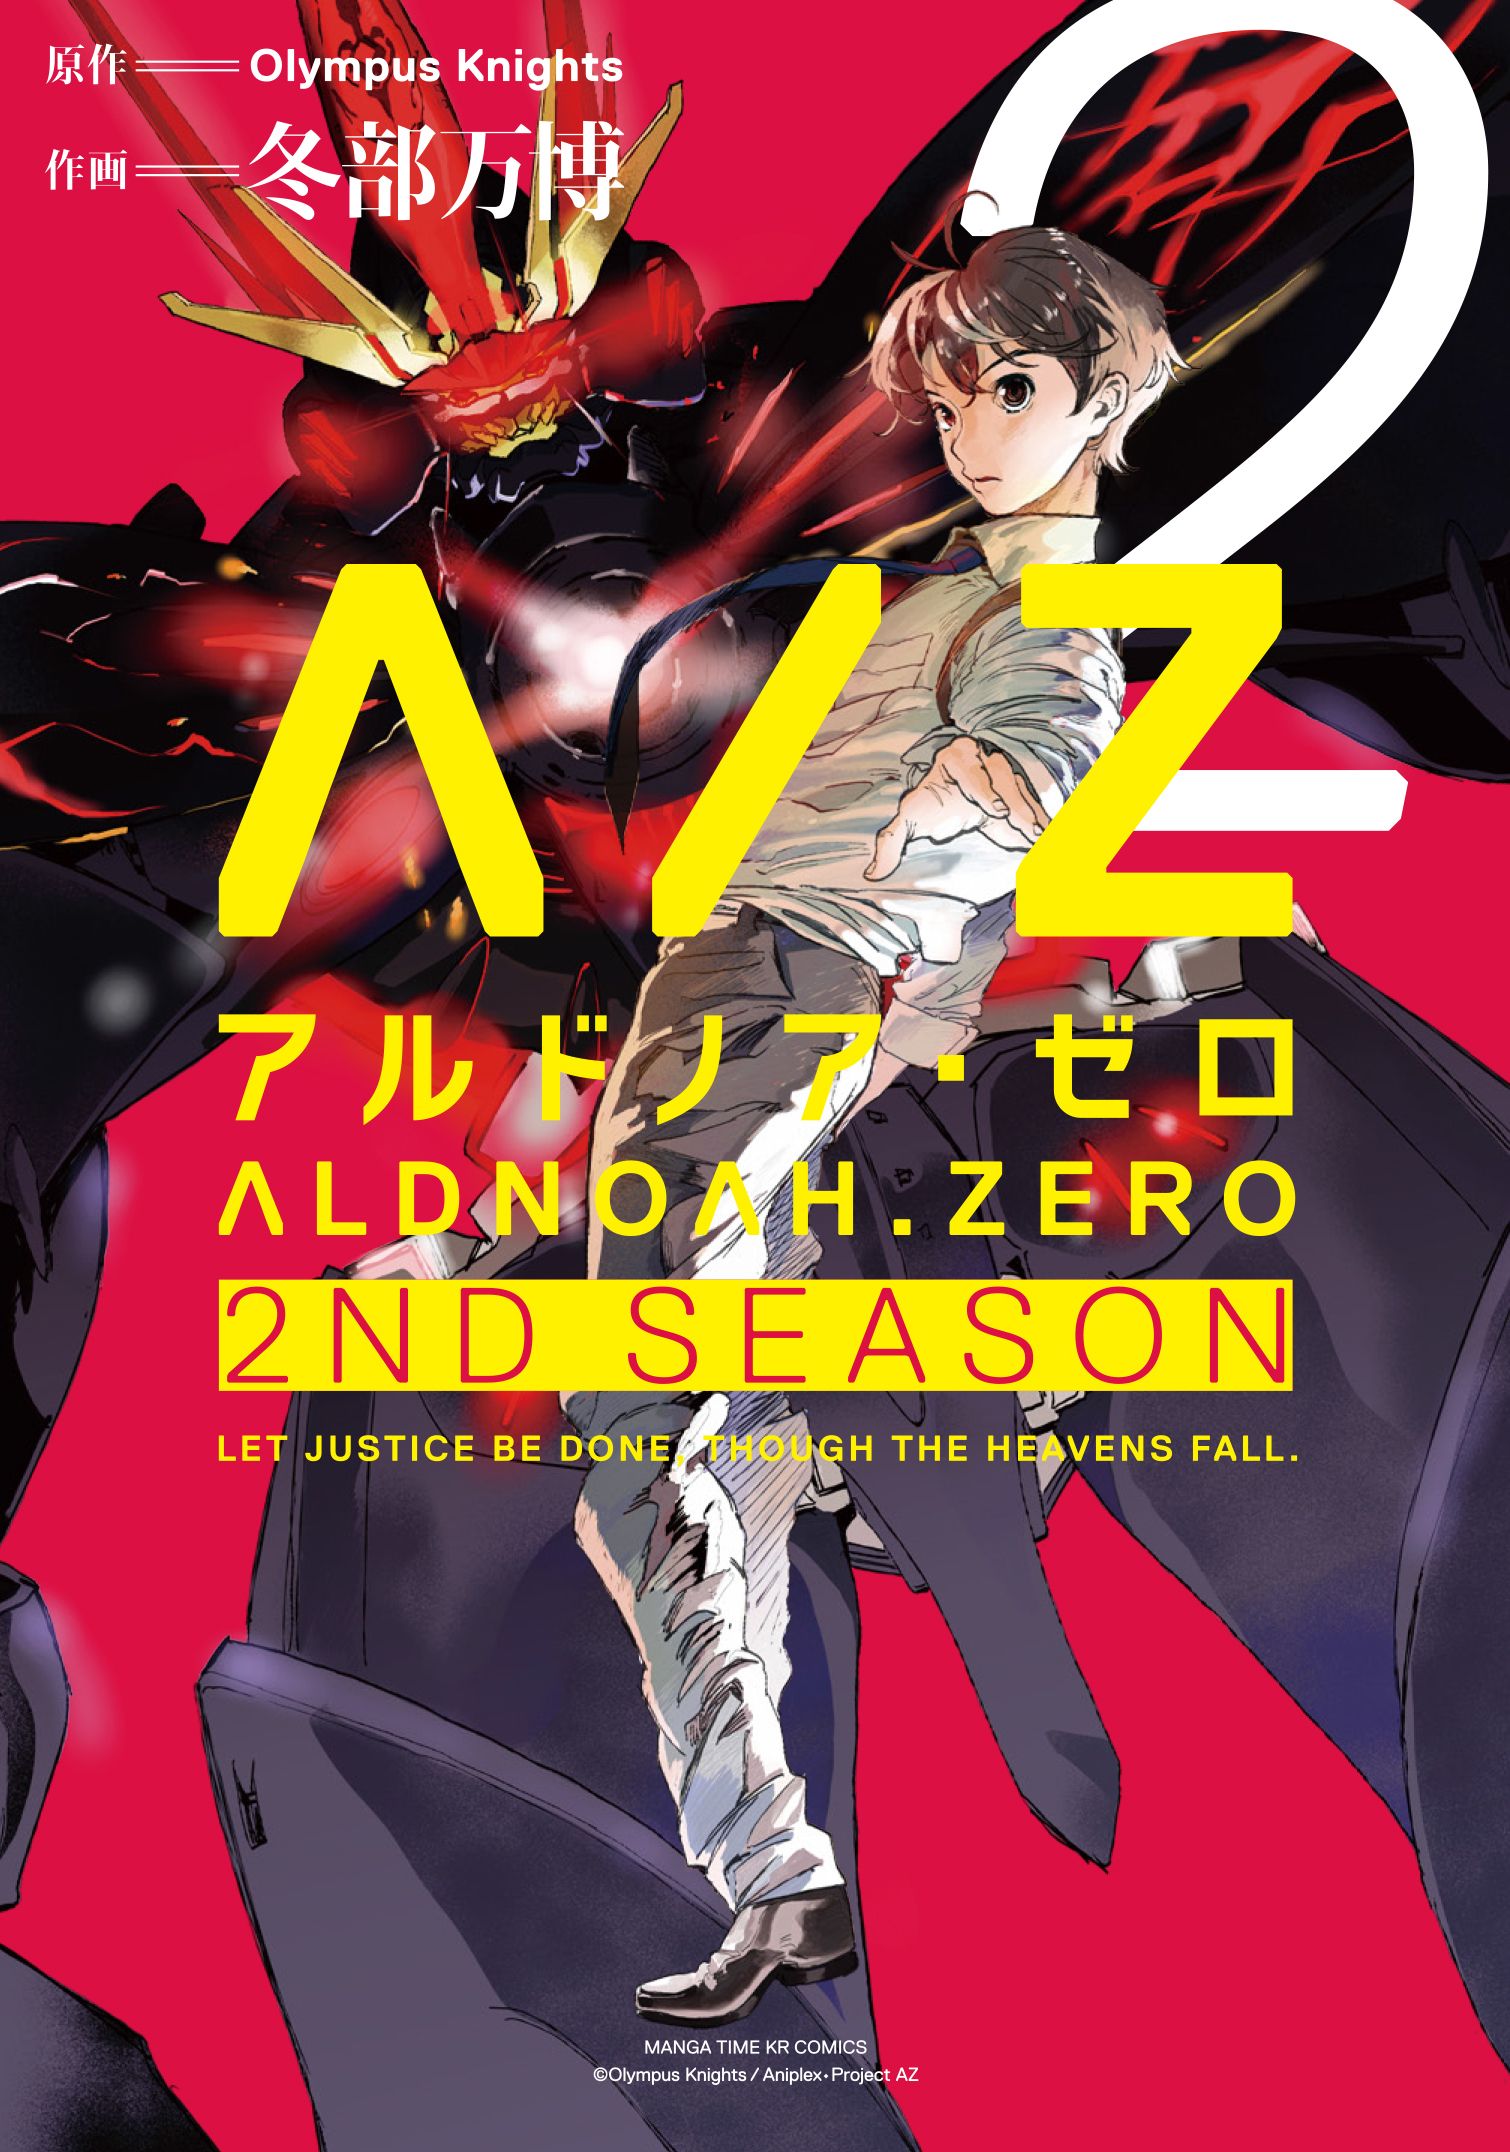 Aldnoah.Zero [Series] - Anime/Manga Talk - Fuwanovel Forums